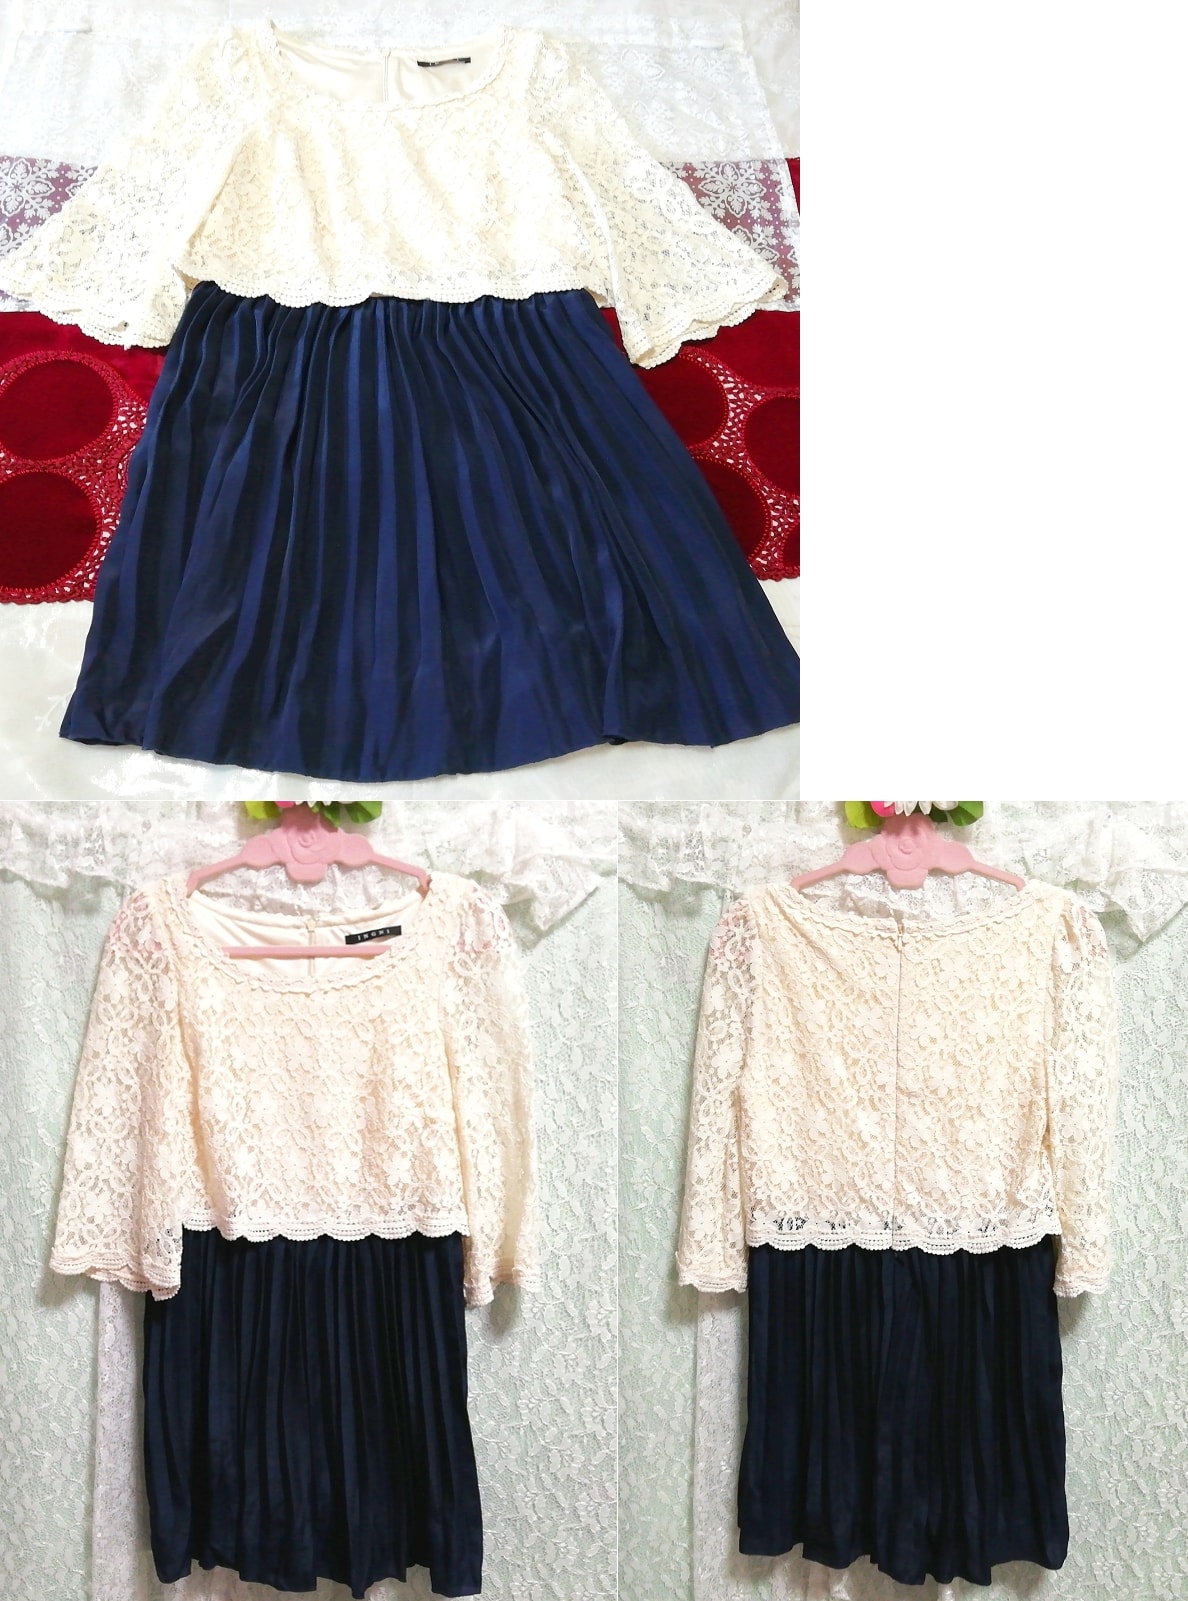 White lace navy blue chiffon pleated skirt long sleeve tunic negligee nightgown dress, tunic, long sleeve, m size